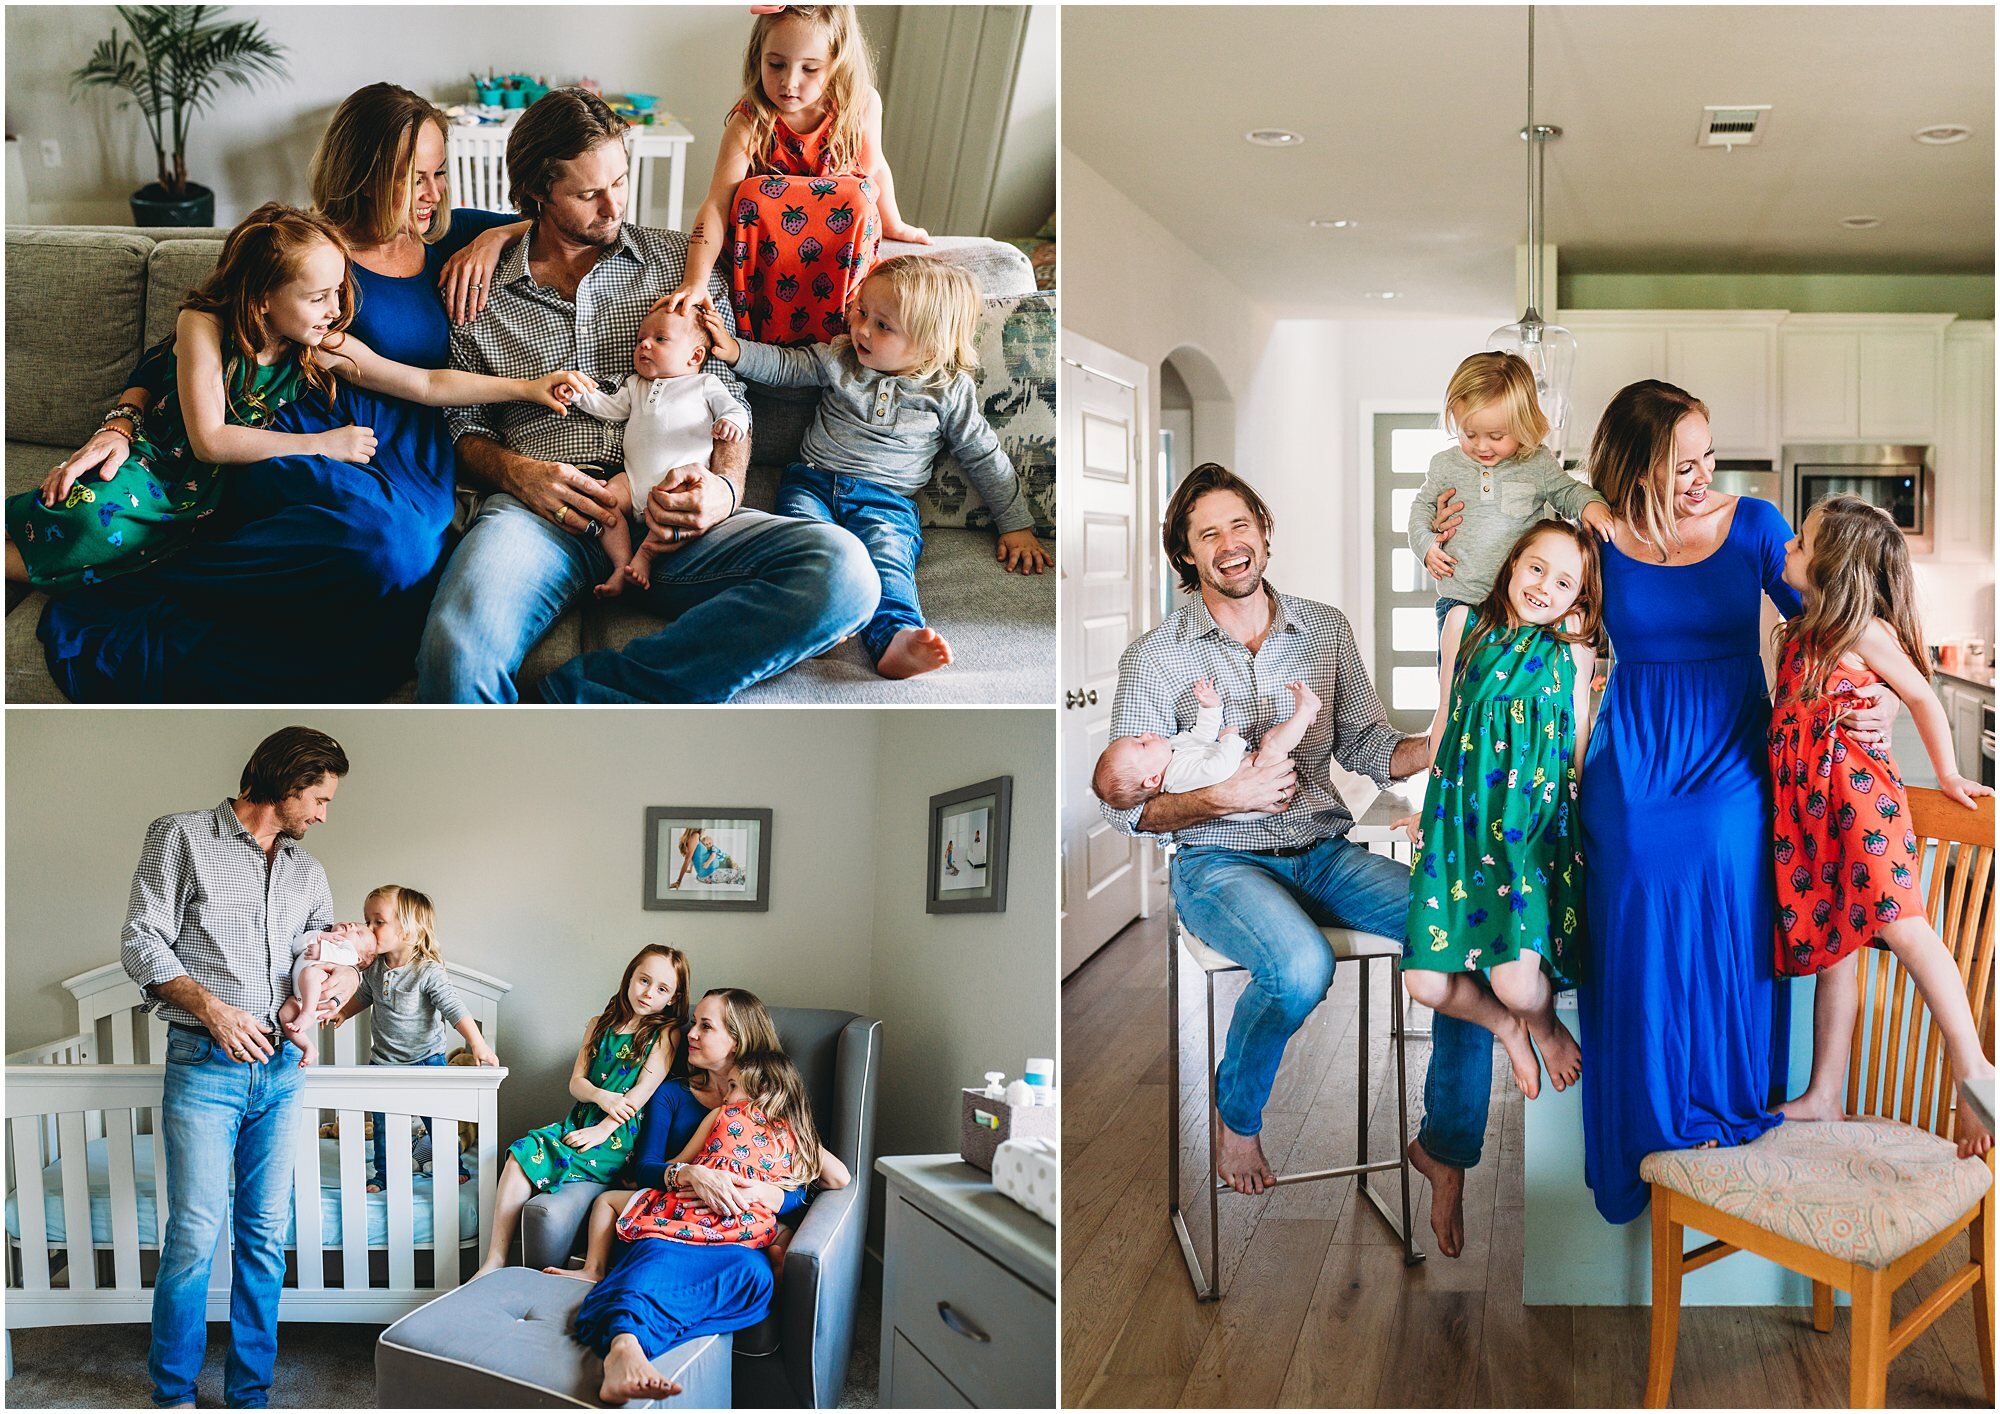 sabrina-gebhardt-family-at-home-together-photographer.jpg